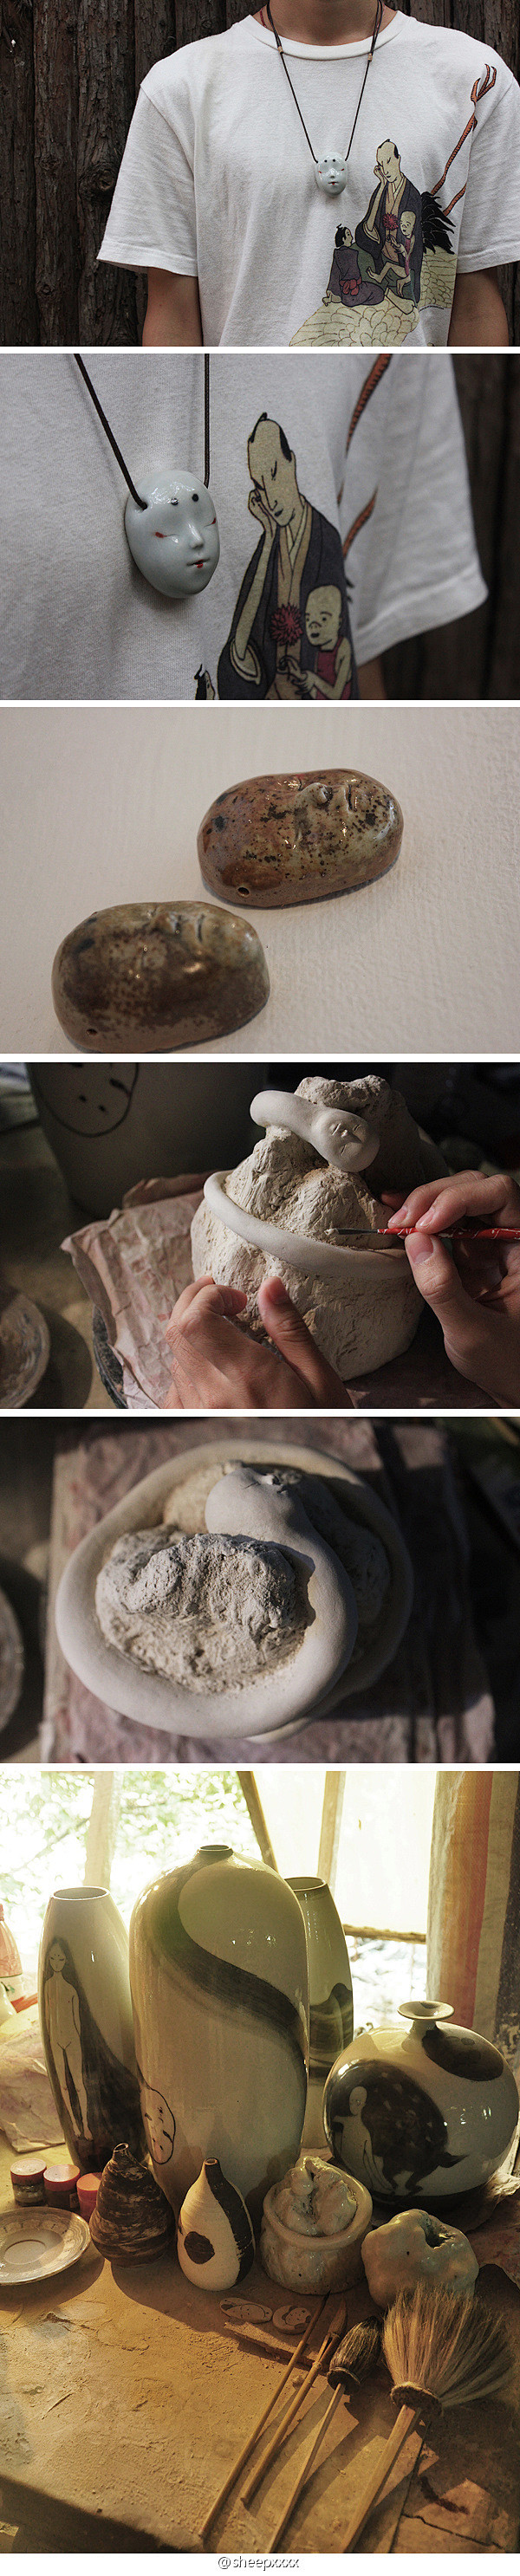 sheep-陶瓷